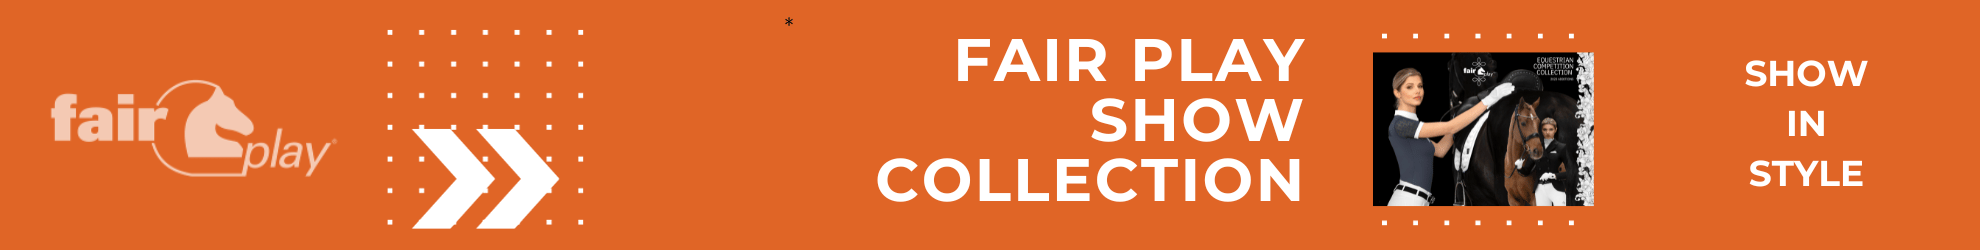 Fair Play Show Collection